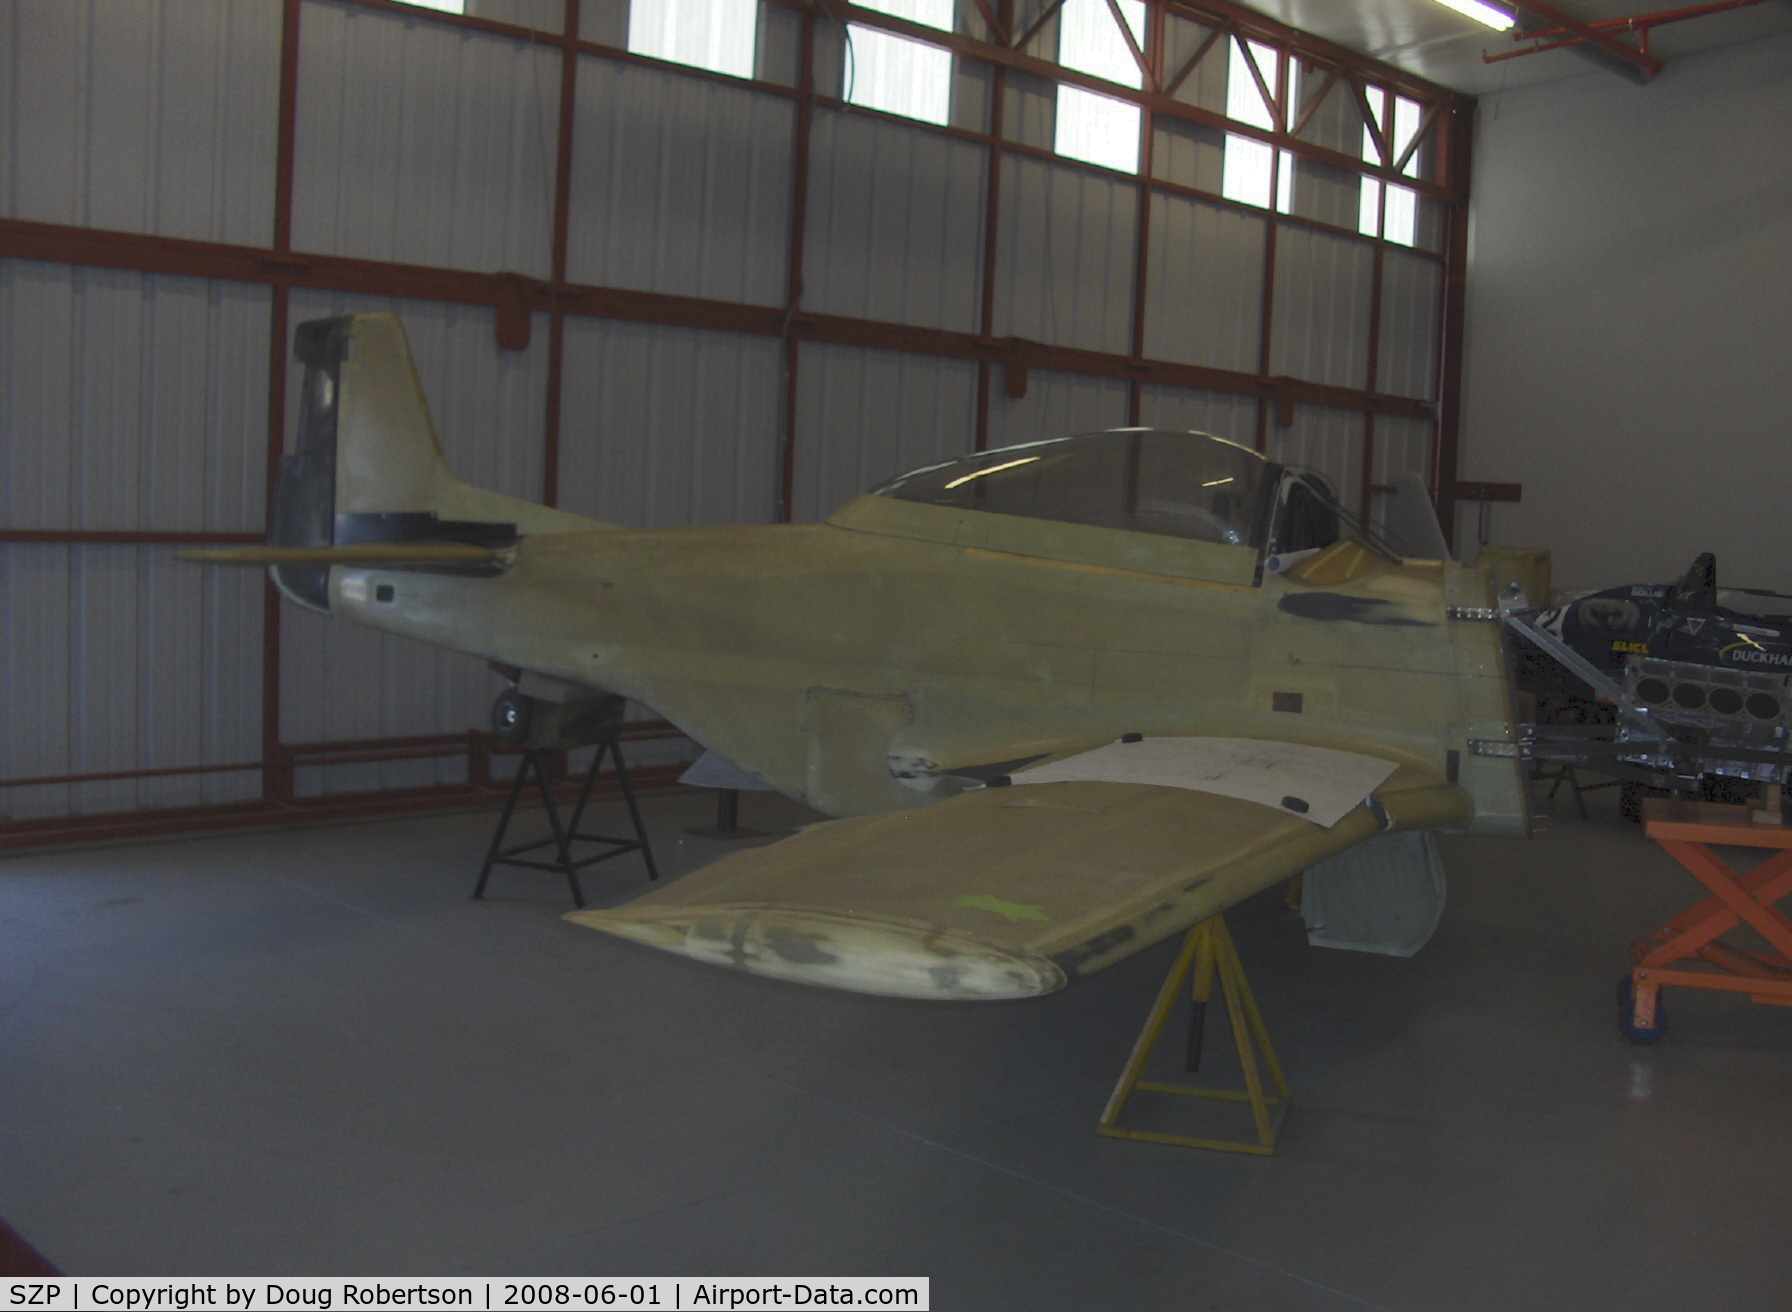 Santa Paula Airport (SZP) - Legendary Aircraft LLC, 70% scale P-51D MUSTANGS in Area 51. Molded composite construction.